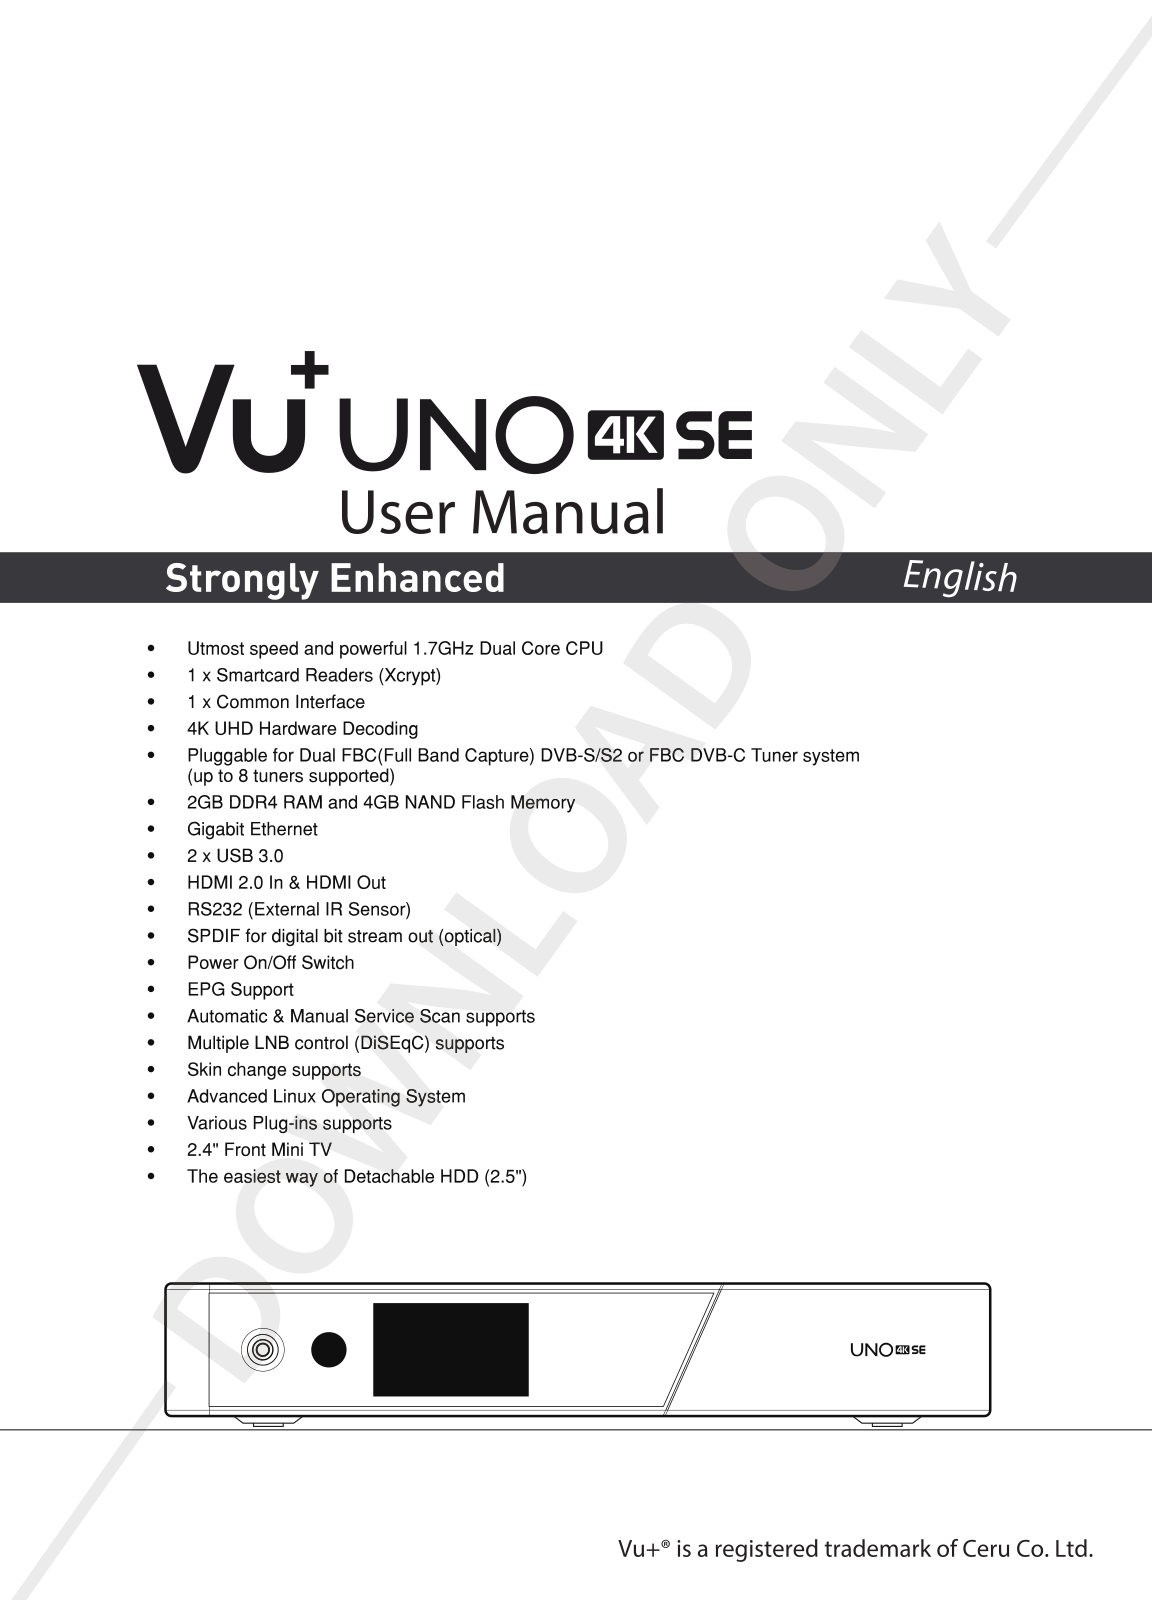 VU+ UNO 4K SE User Manual